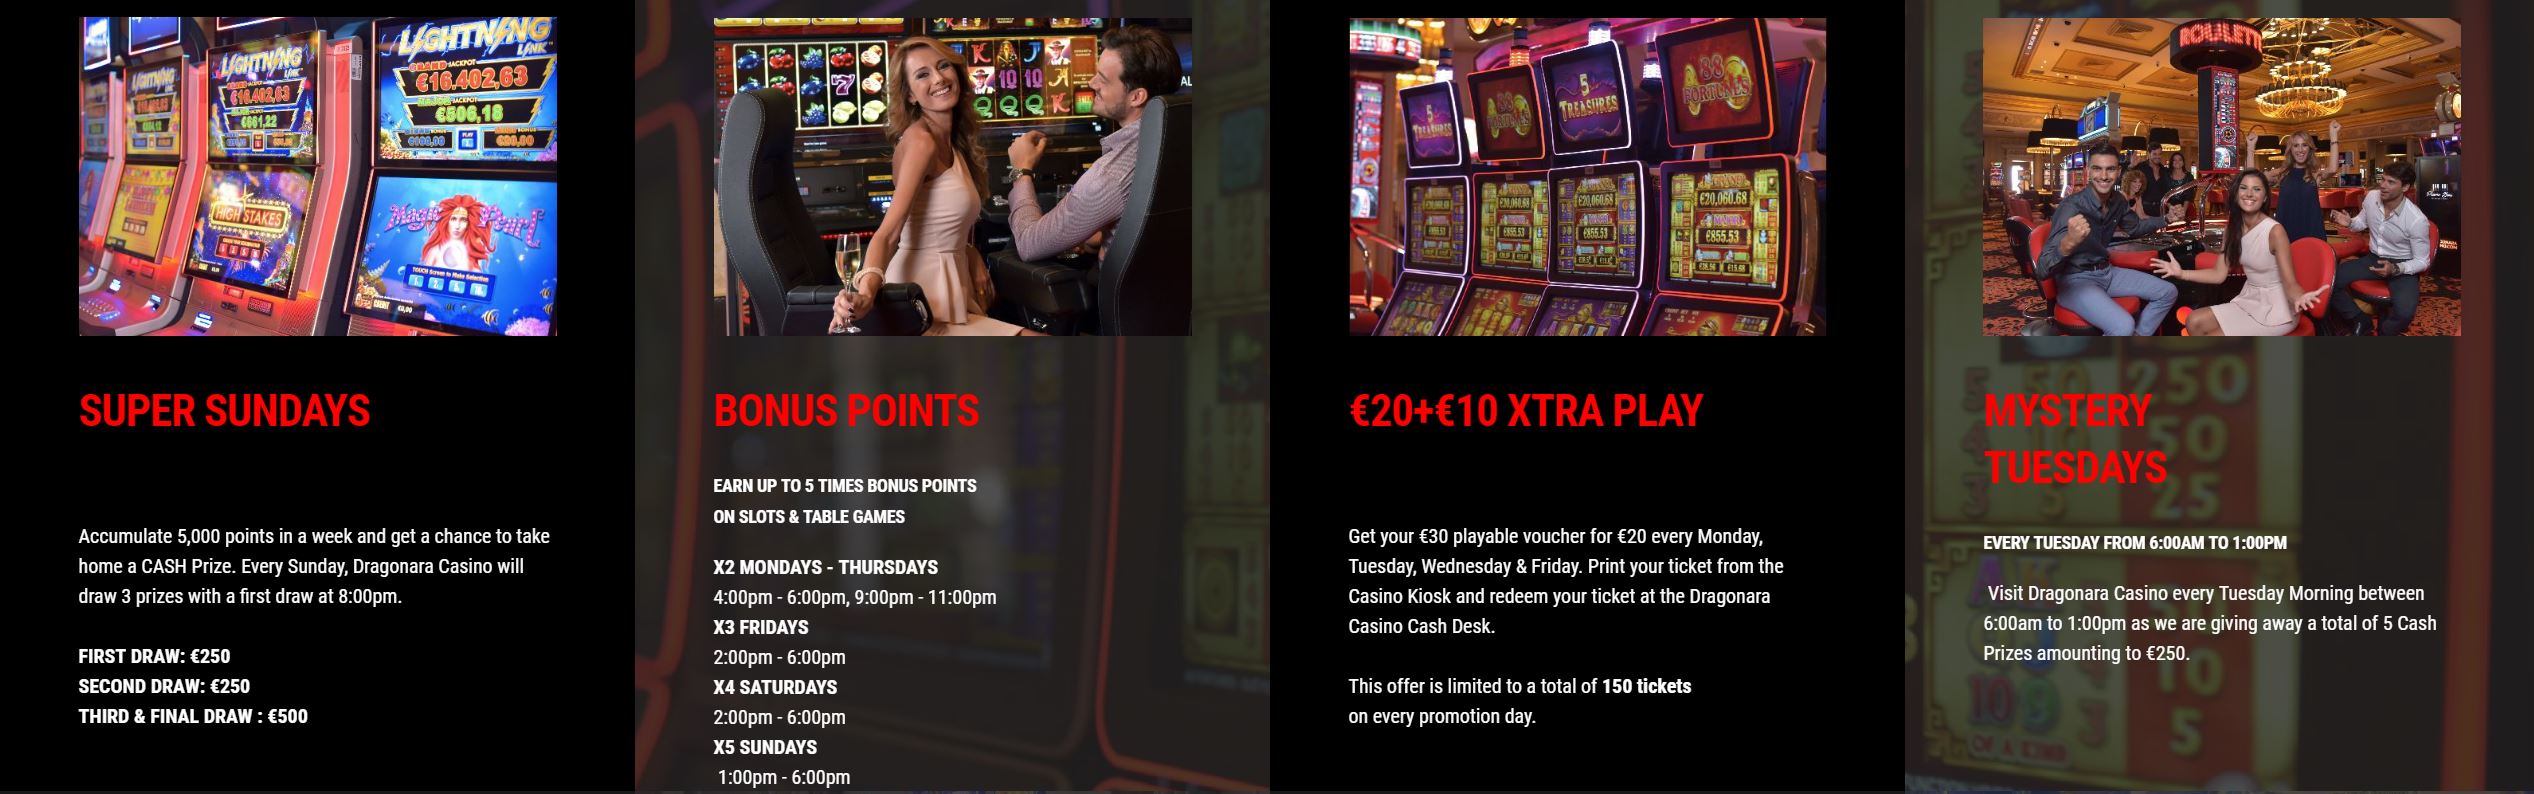 Dragonara Casino Promotions